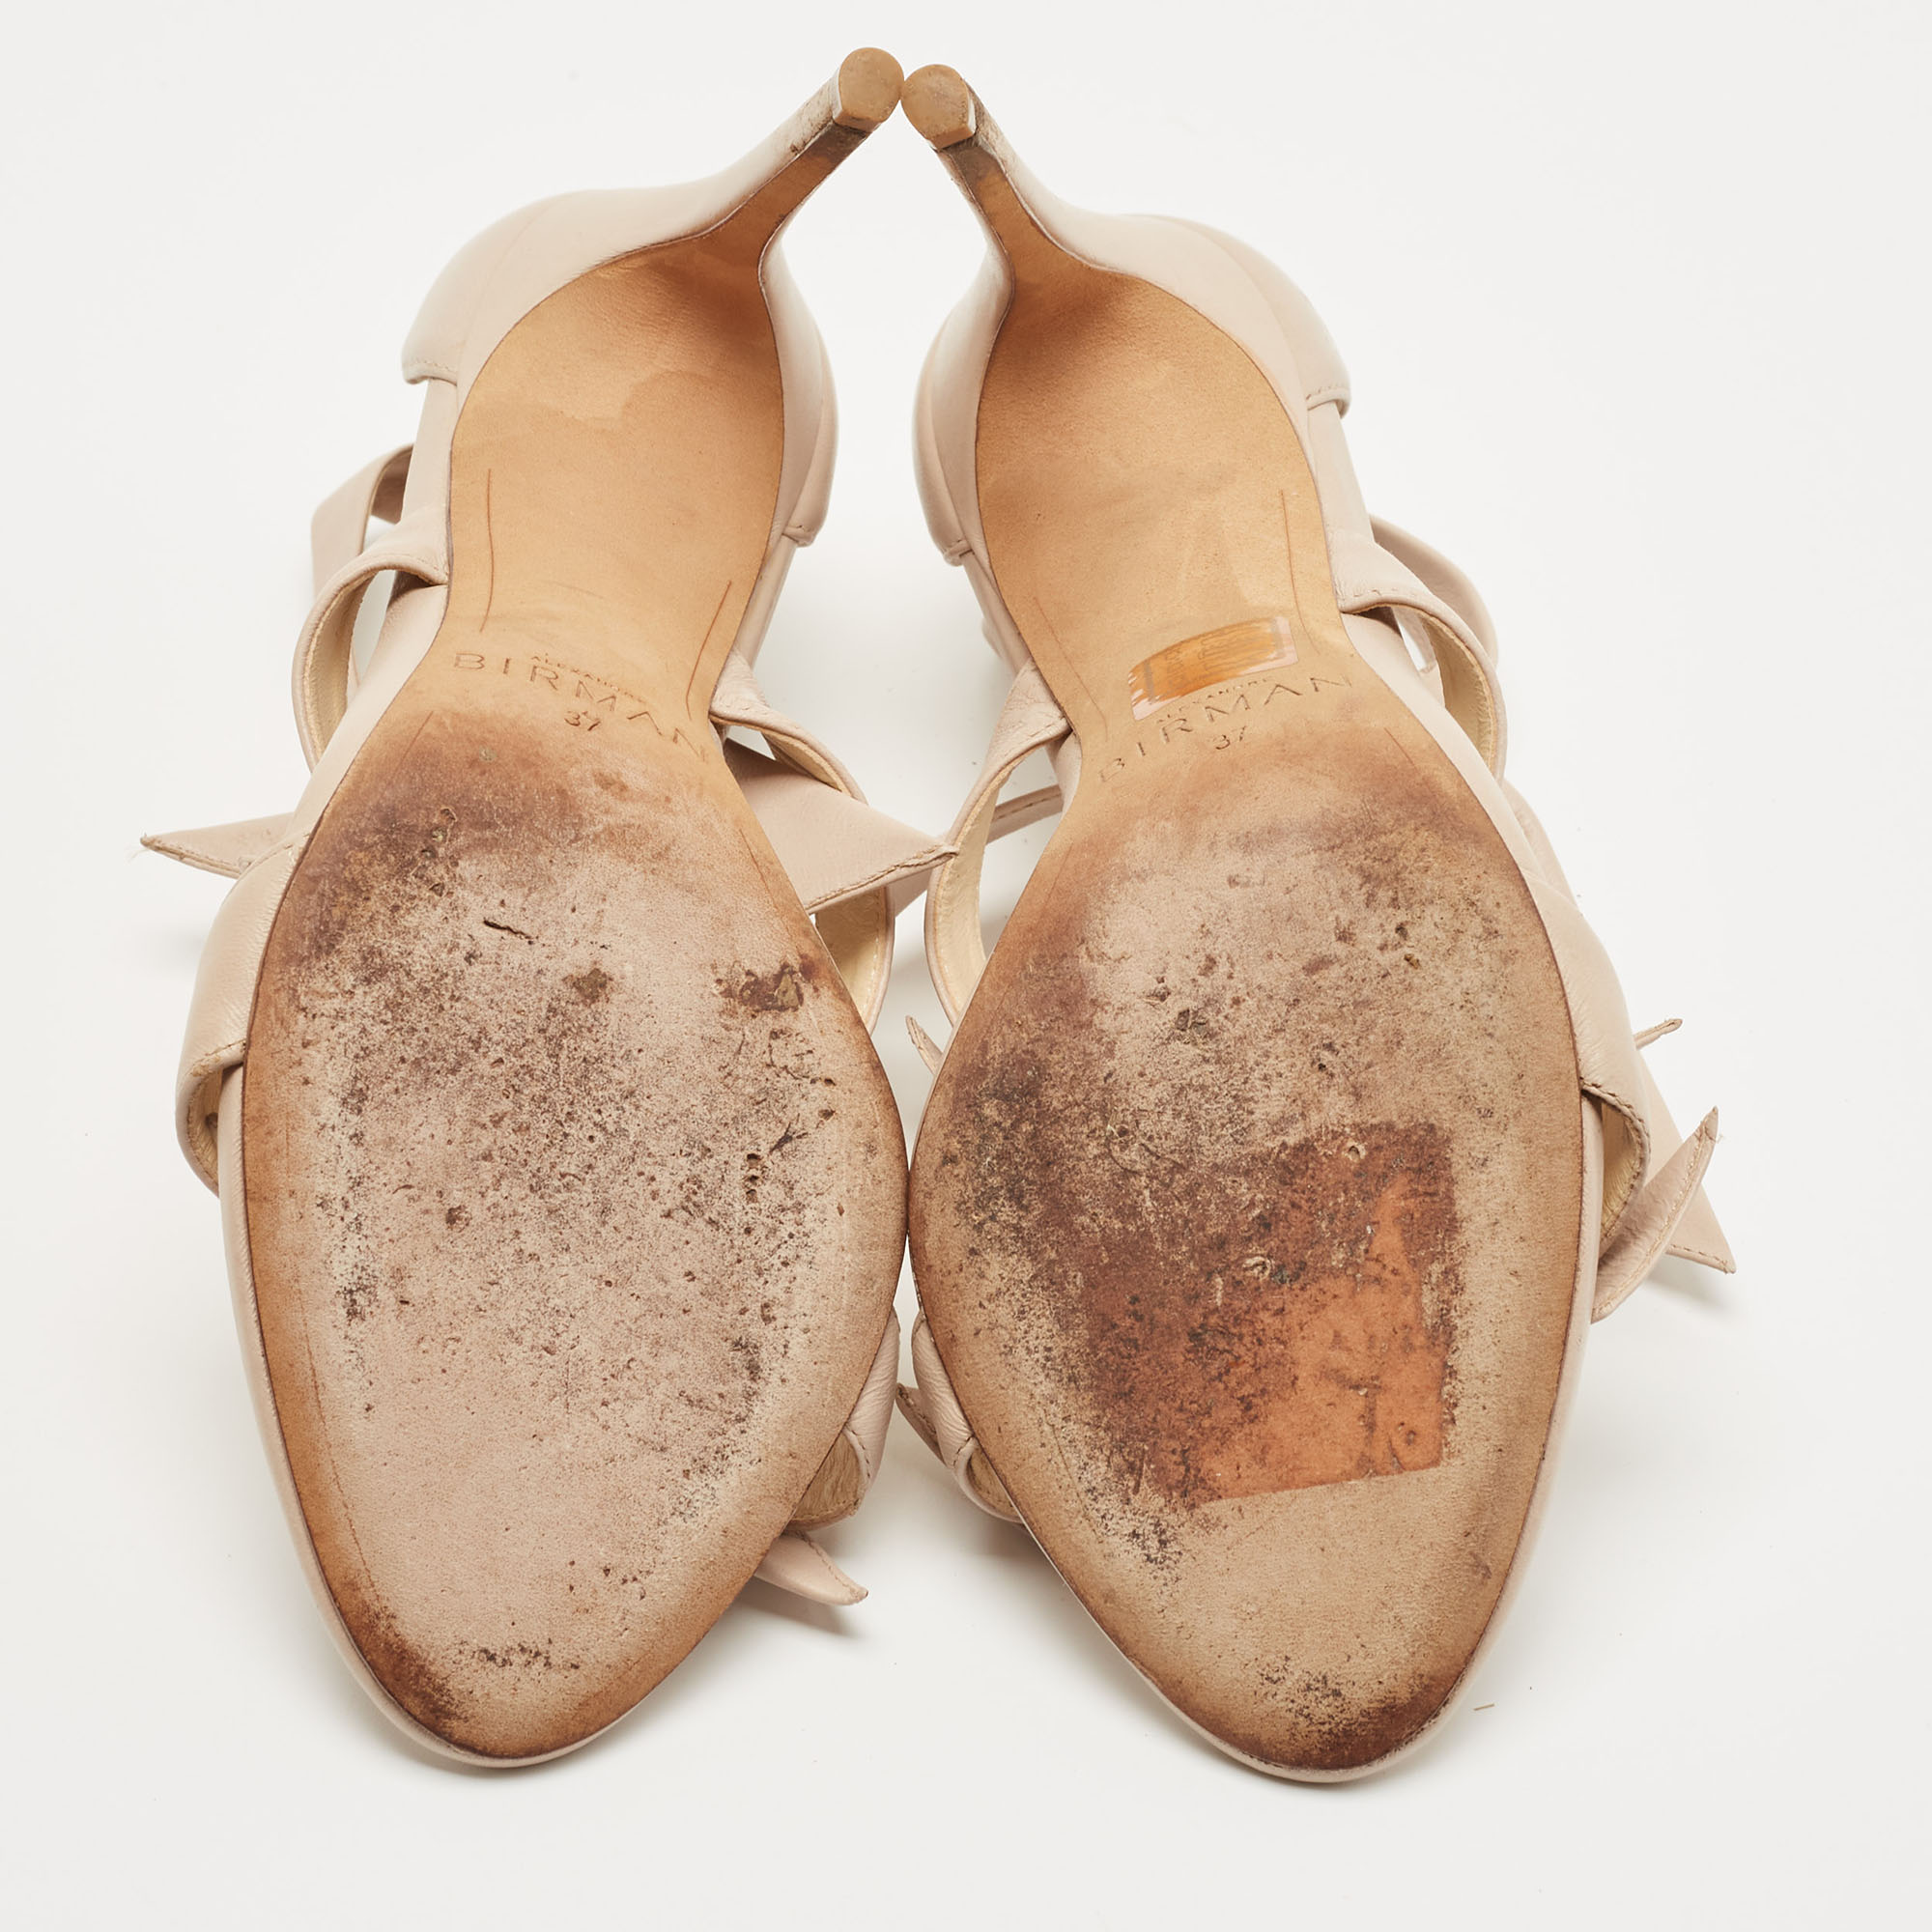 Alexandre Birman Beige Leather Ankle Strap Sandals Size 37